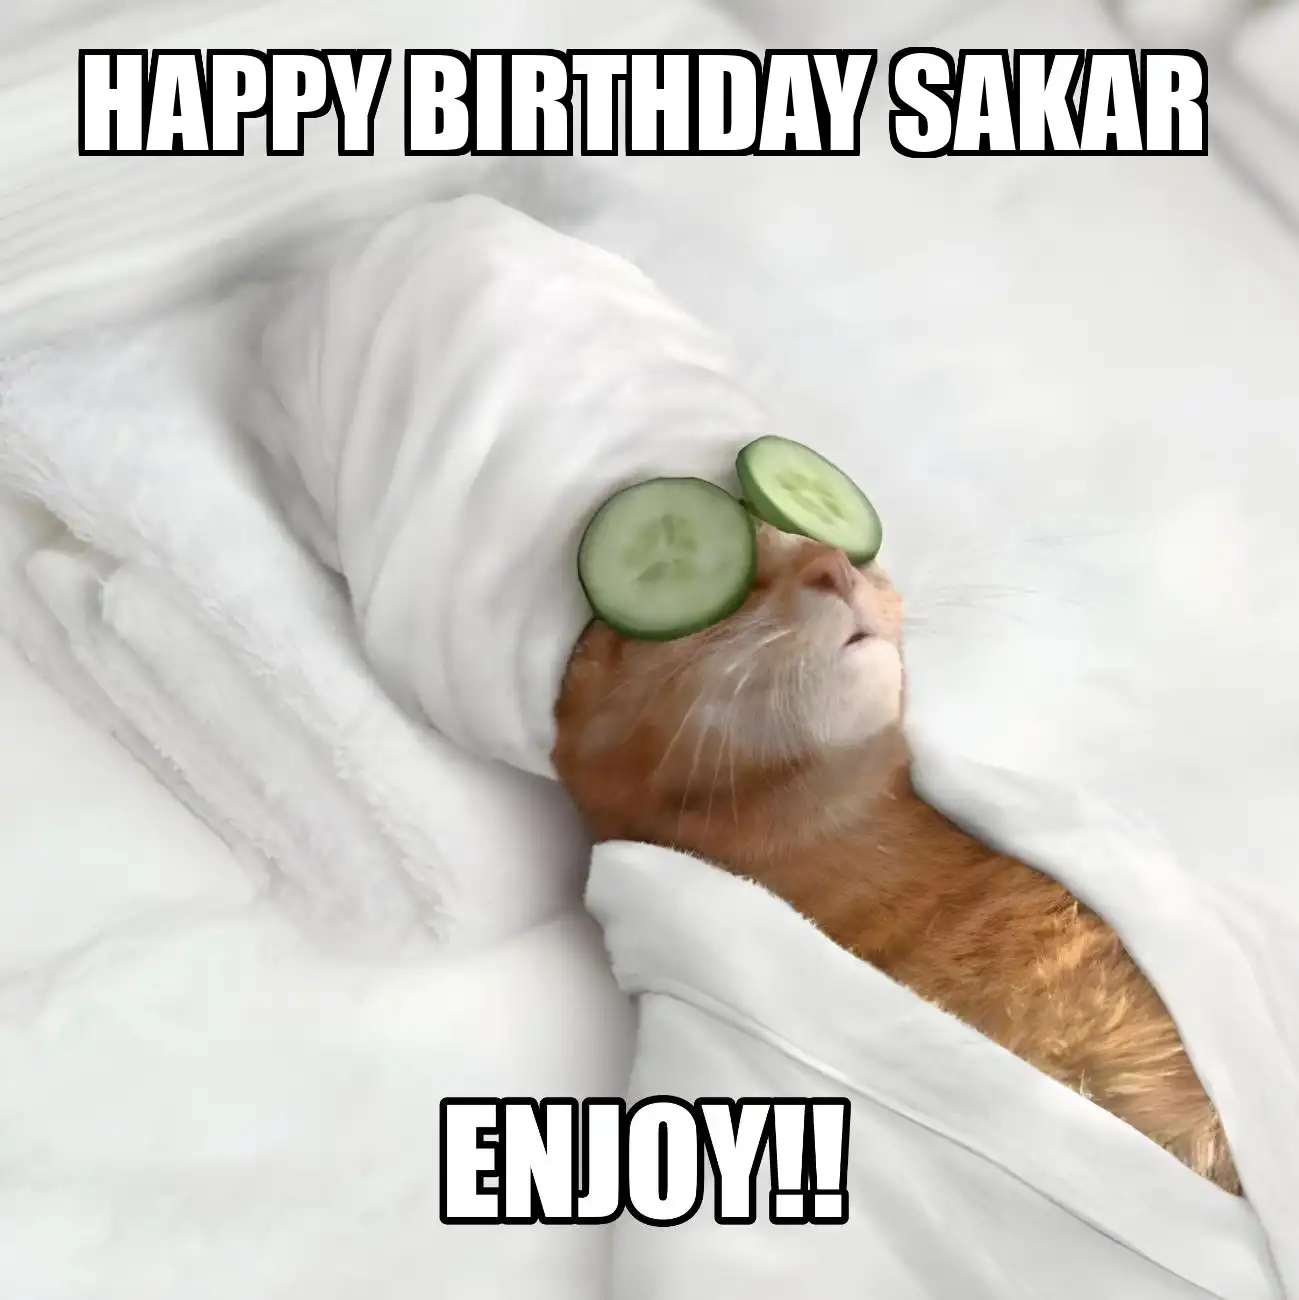 Happy Birthday Sakar Enjoy Cat Meme